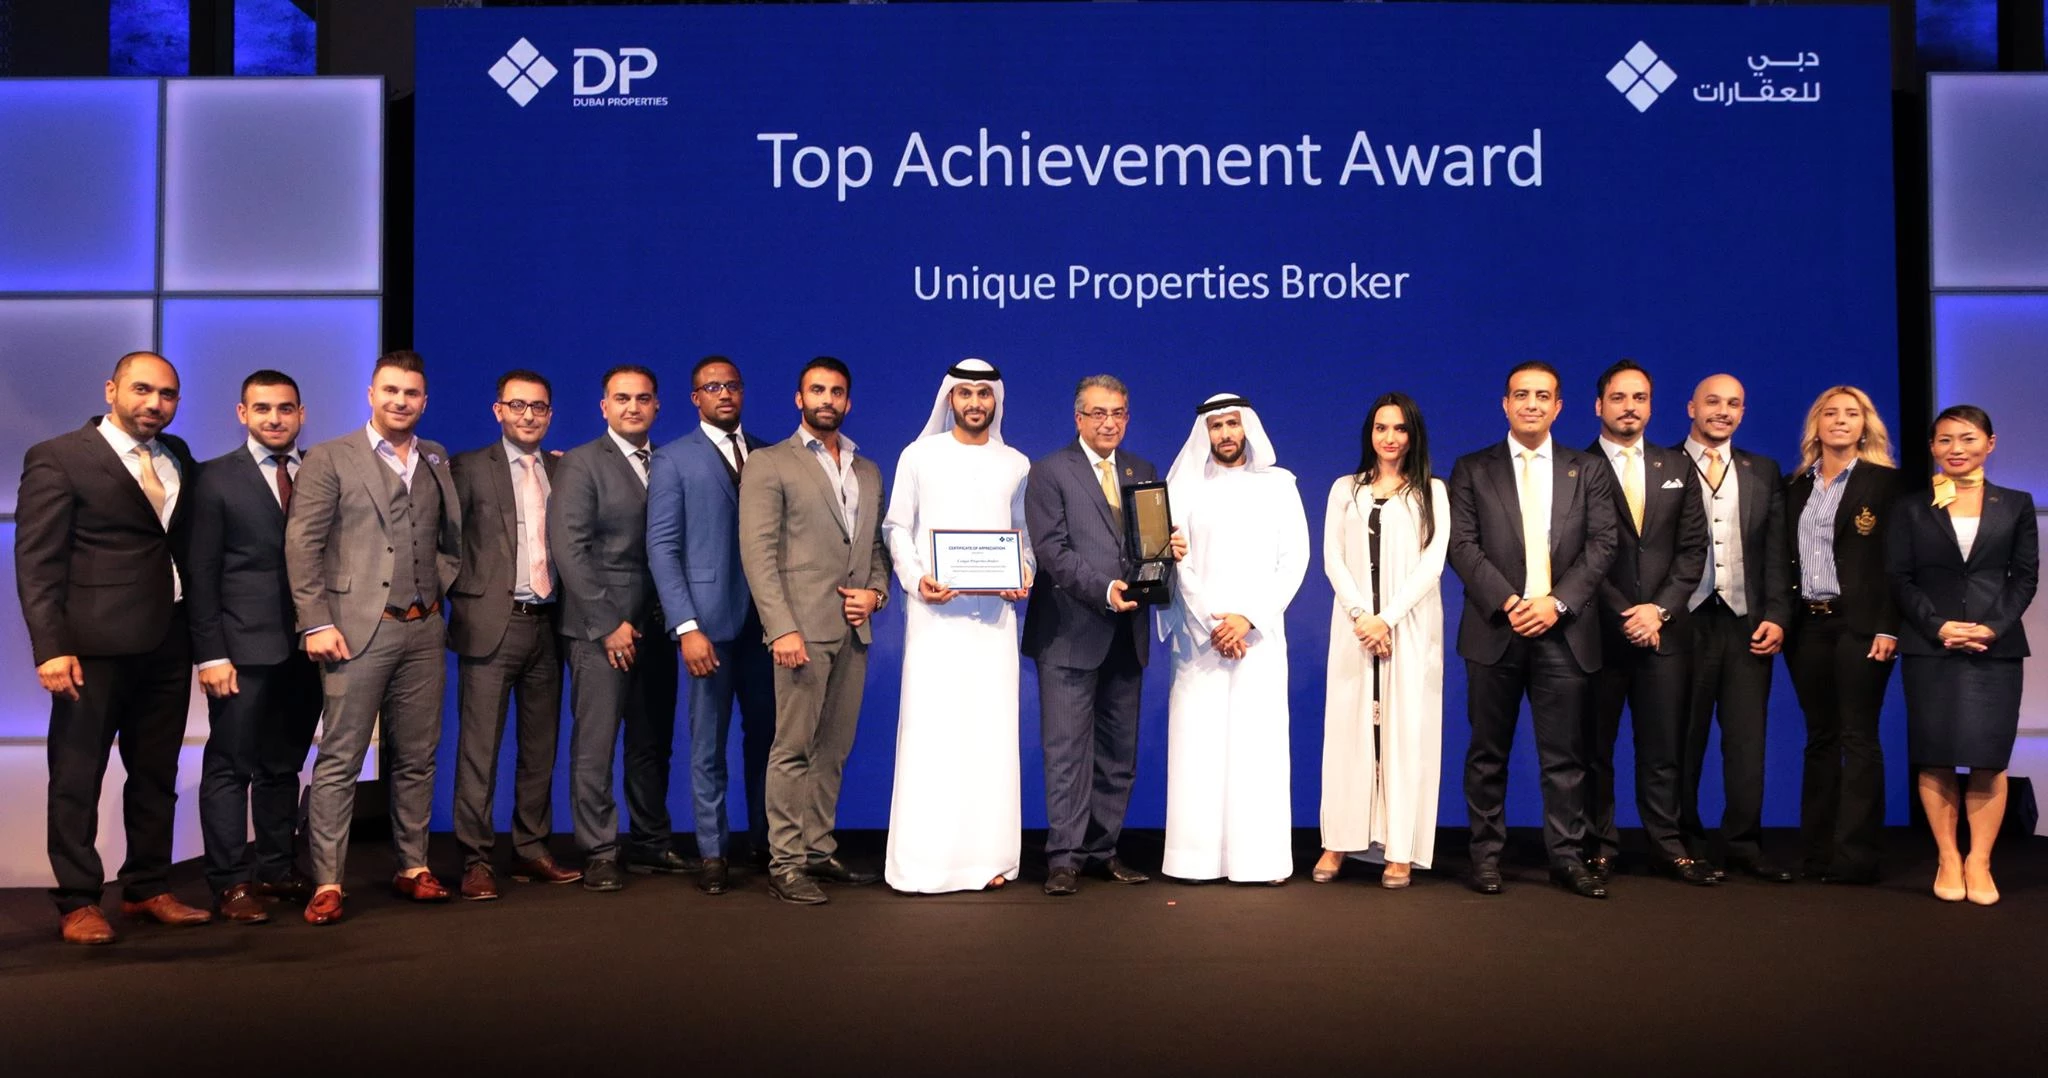 Dubai Properties Top Achievement